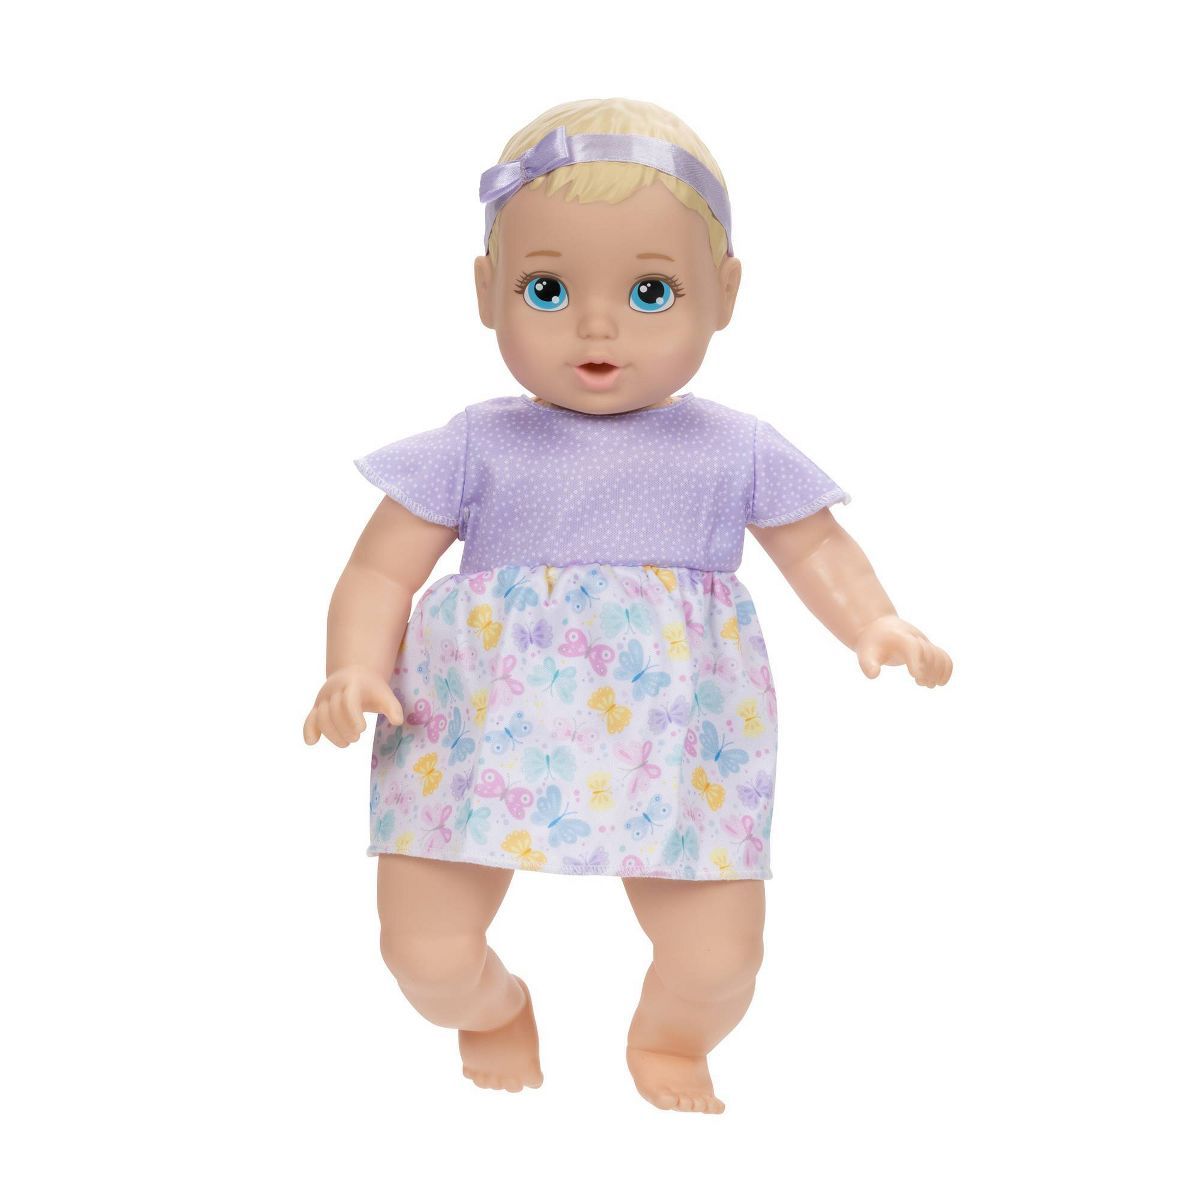 Perfectly Cute Basic 14" Girl Baby Doll - Blonde Hair, Blue Eyes | Target